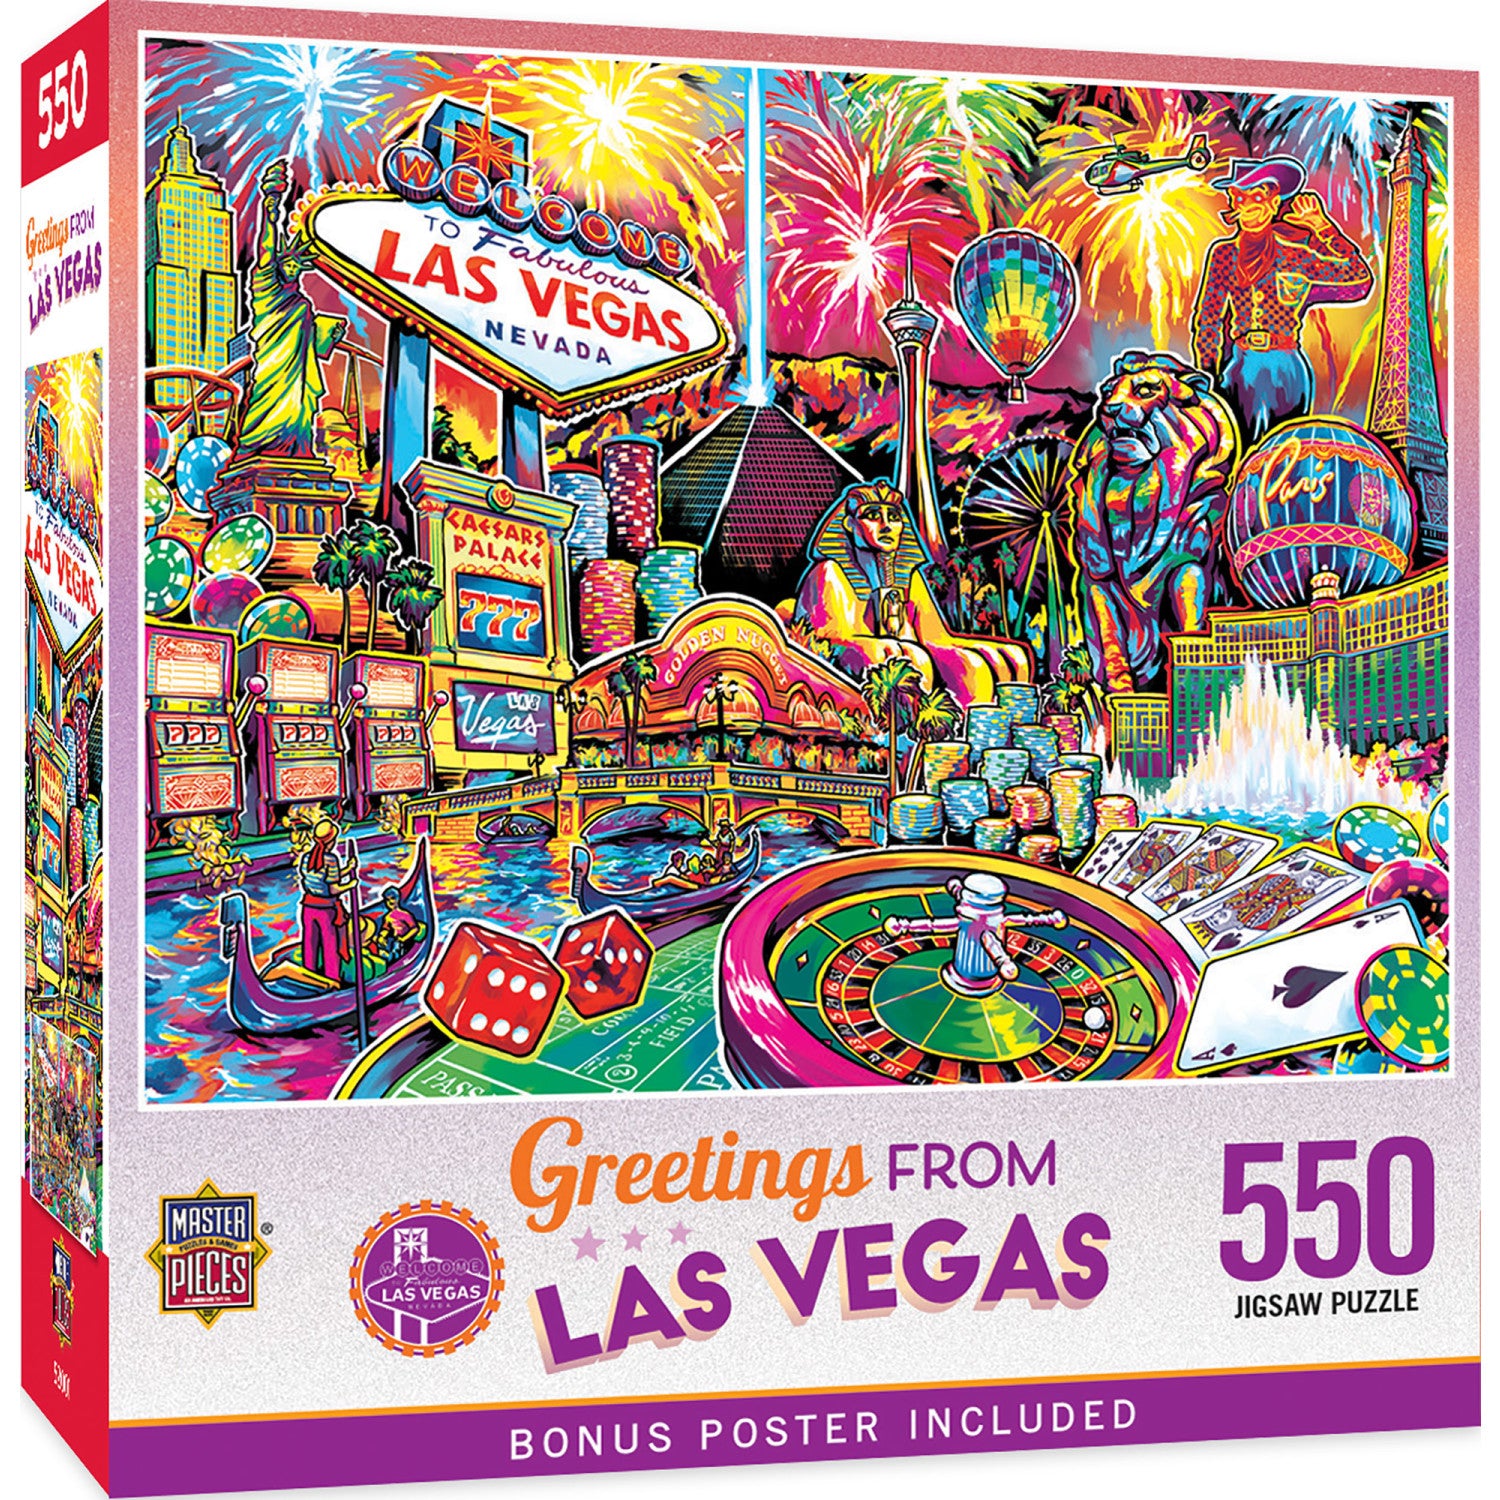 Greetings From Las Vegas - 550 Piece Jigsaw Puzzle